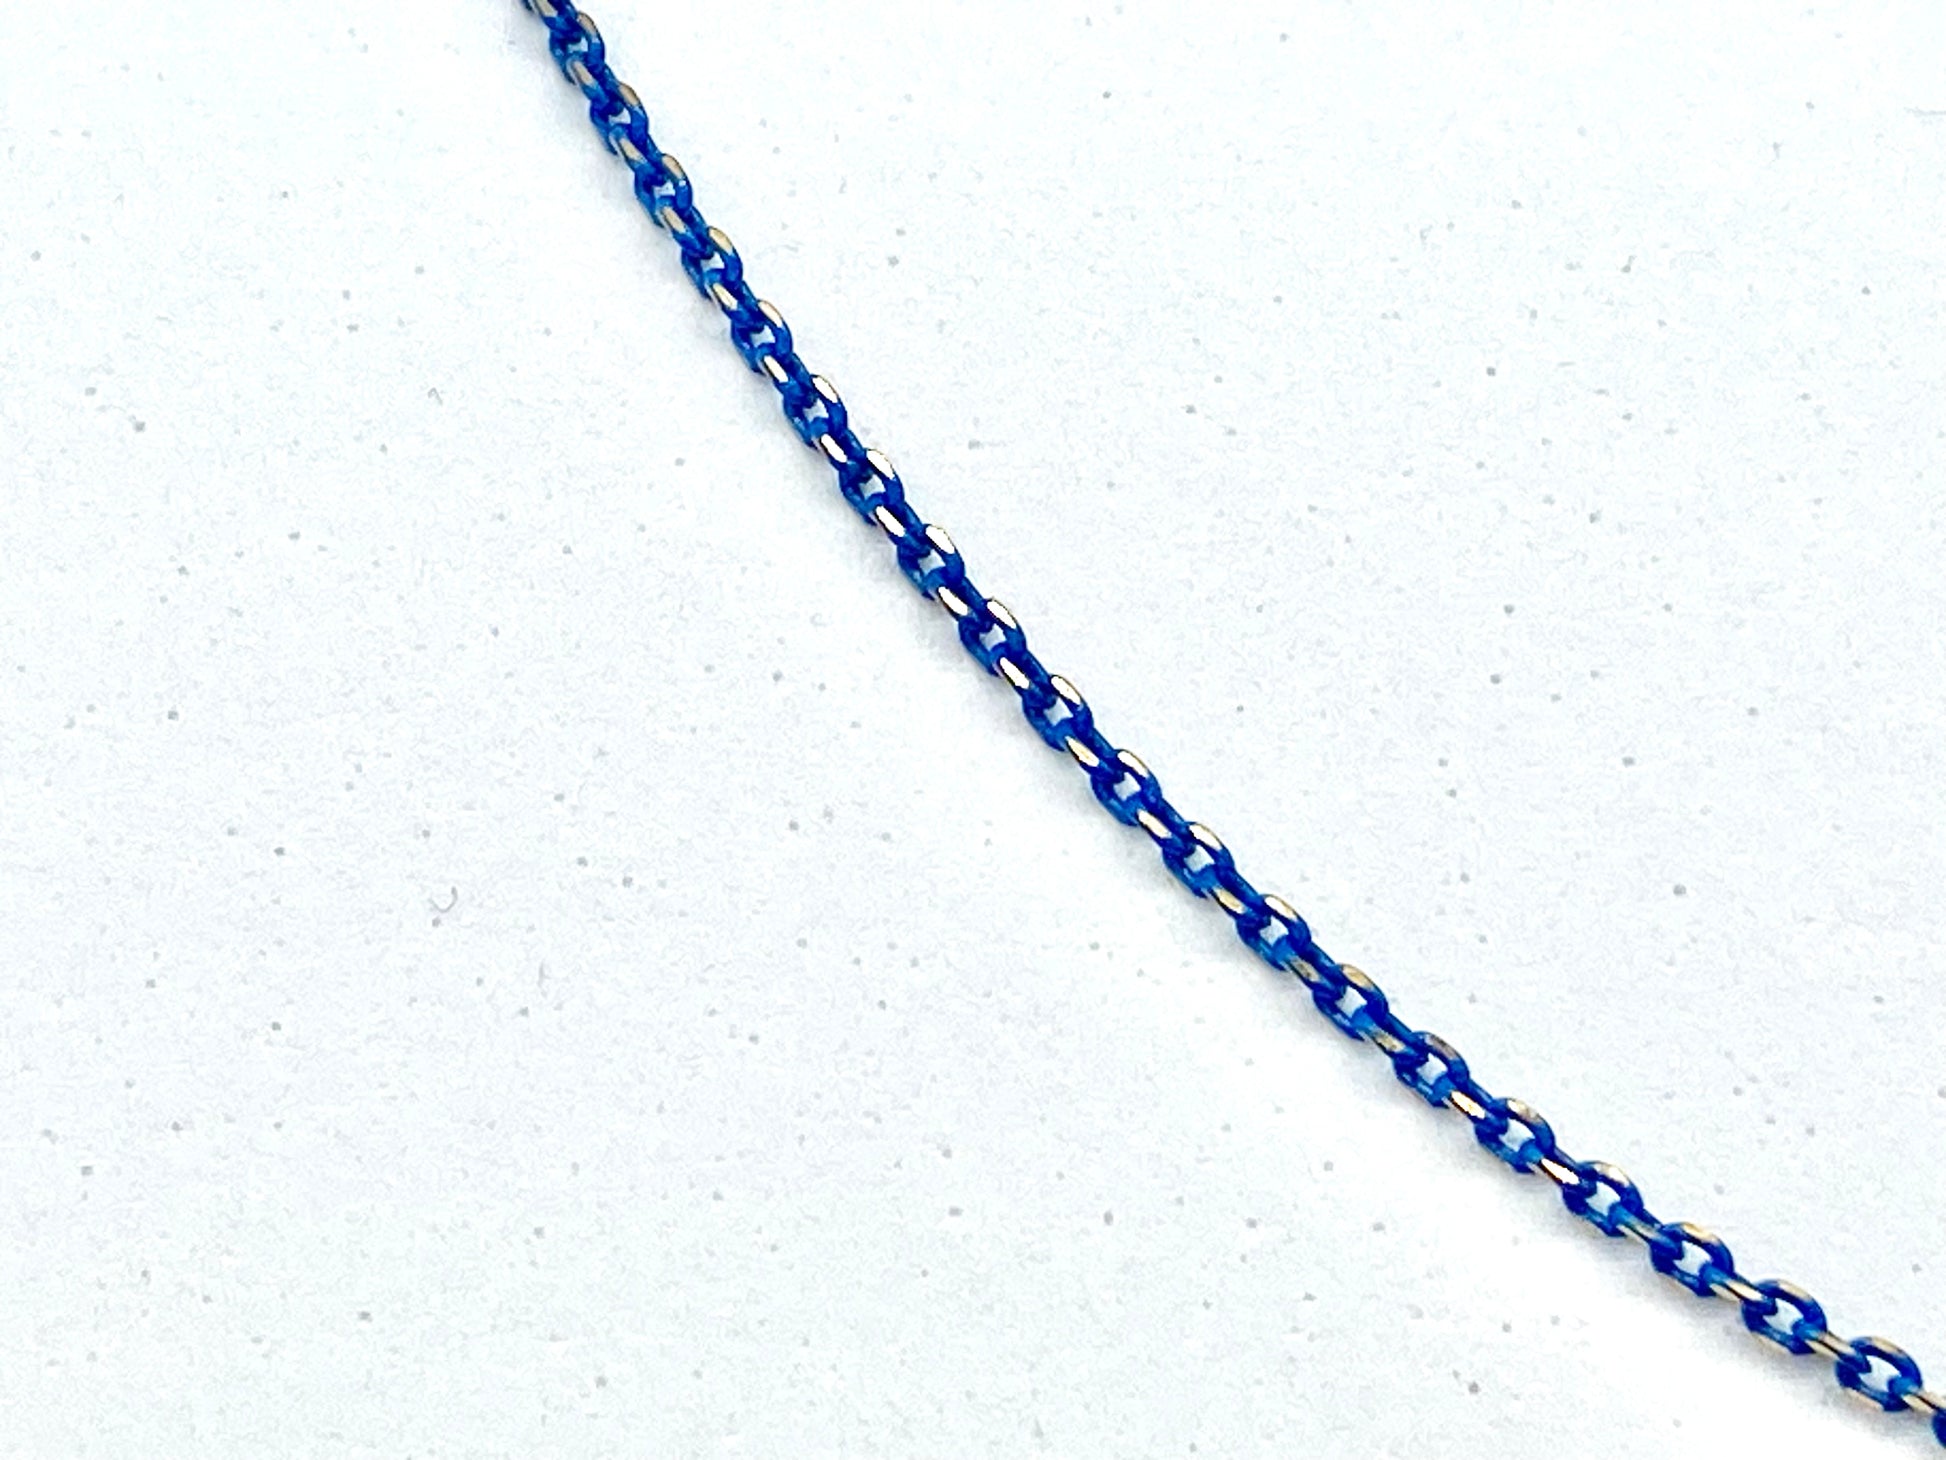 Hamsa Peace Necklace - Emmis Jewelry, Necklace, [product_color]